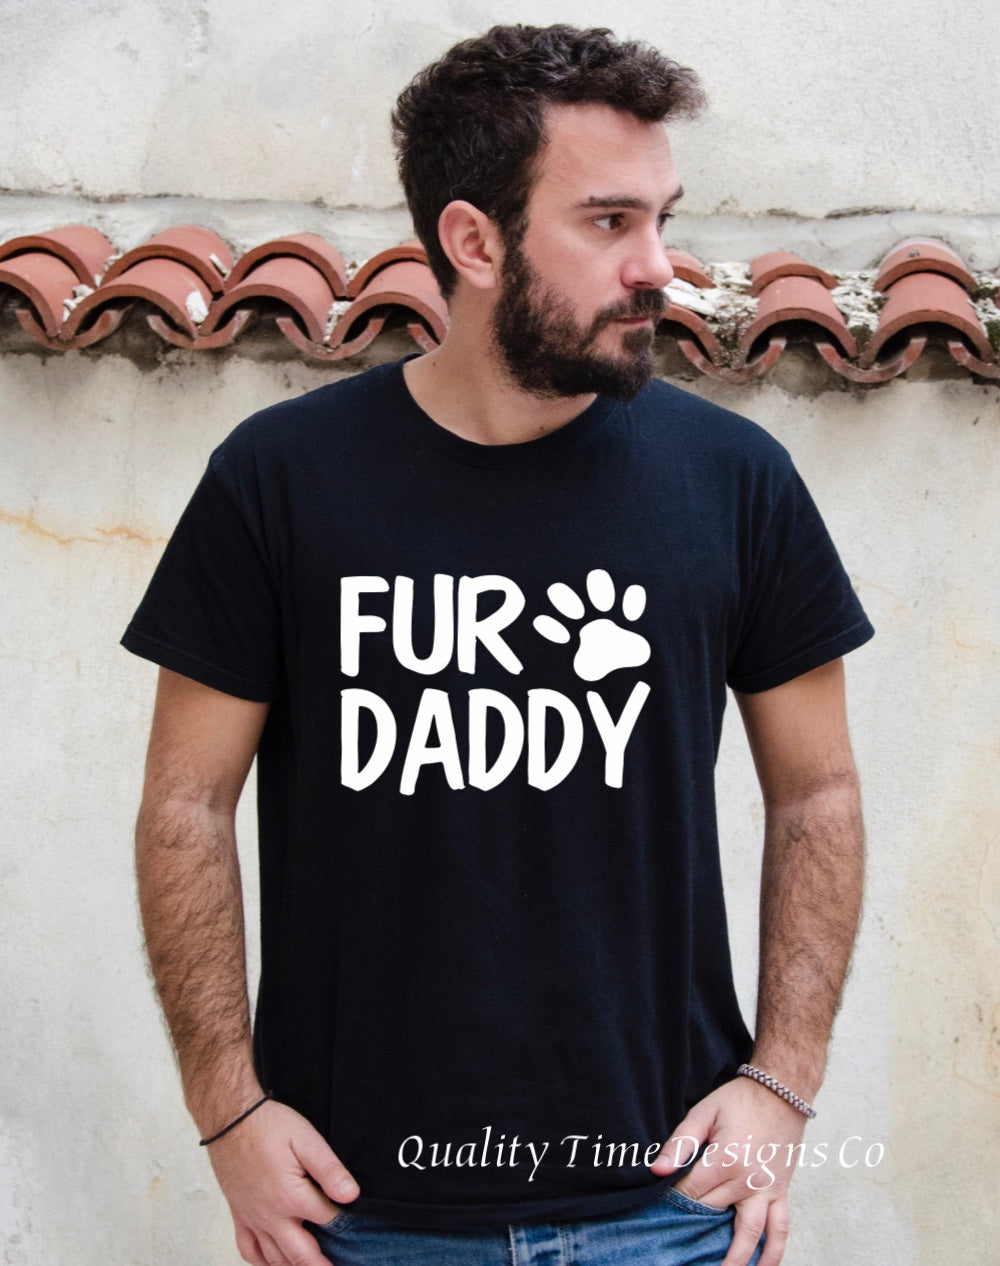 Fur daddy do lover t shirt